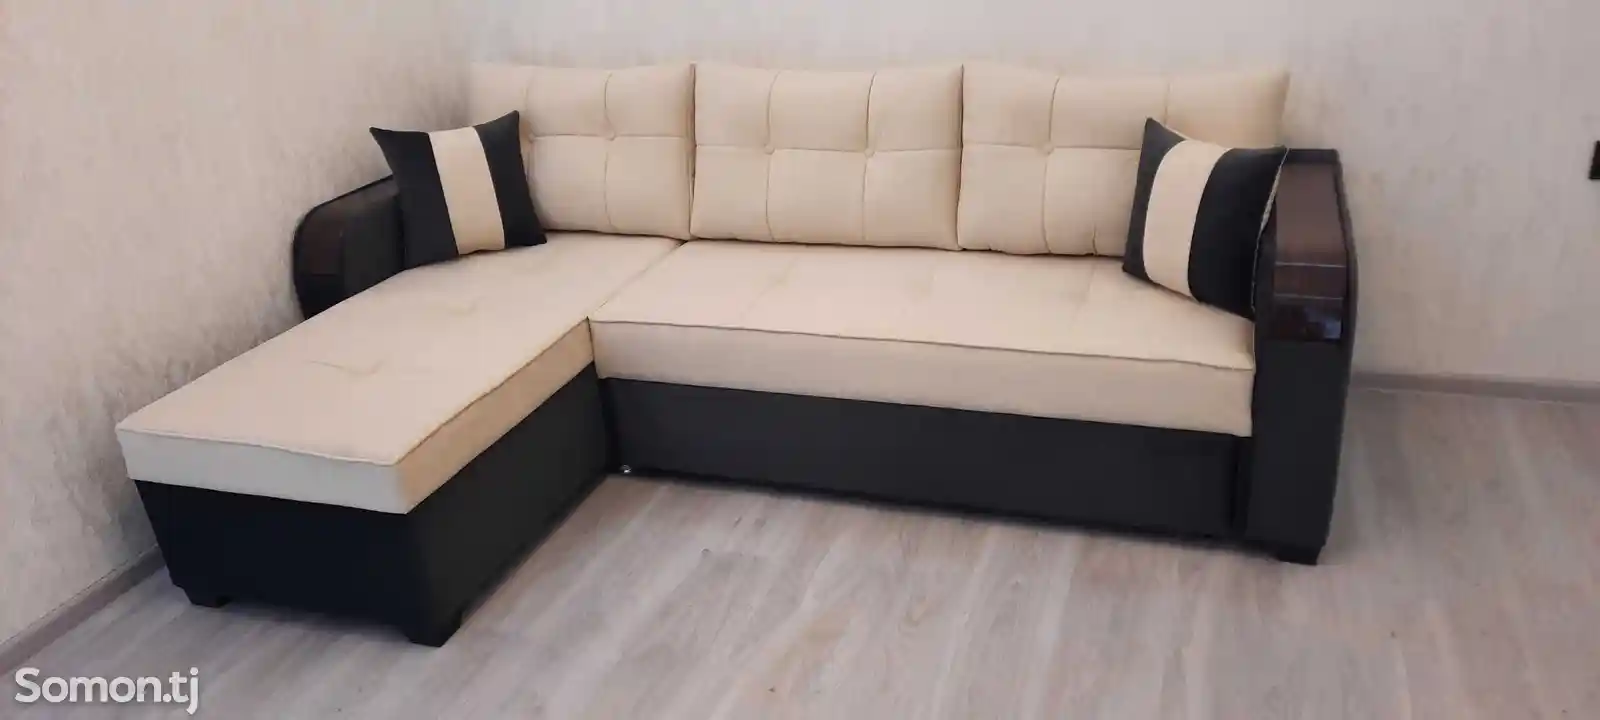 Раскладной диван хай-тек на заказ-1